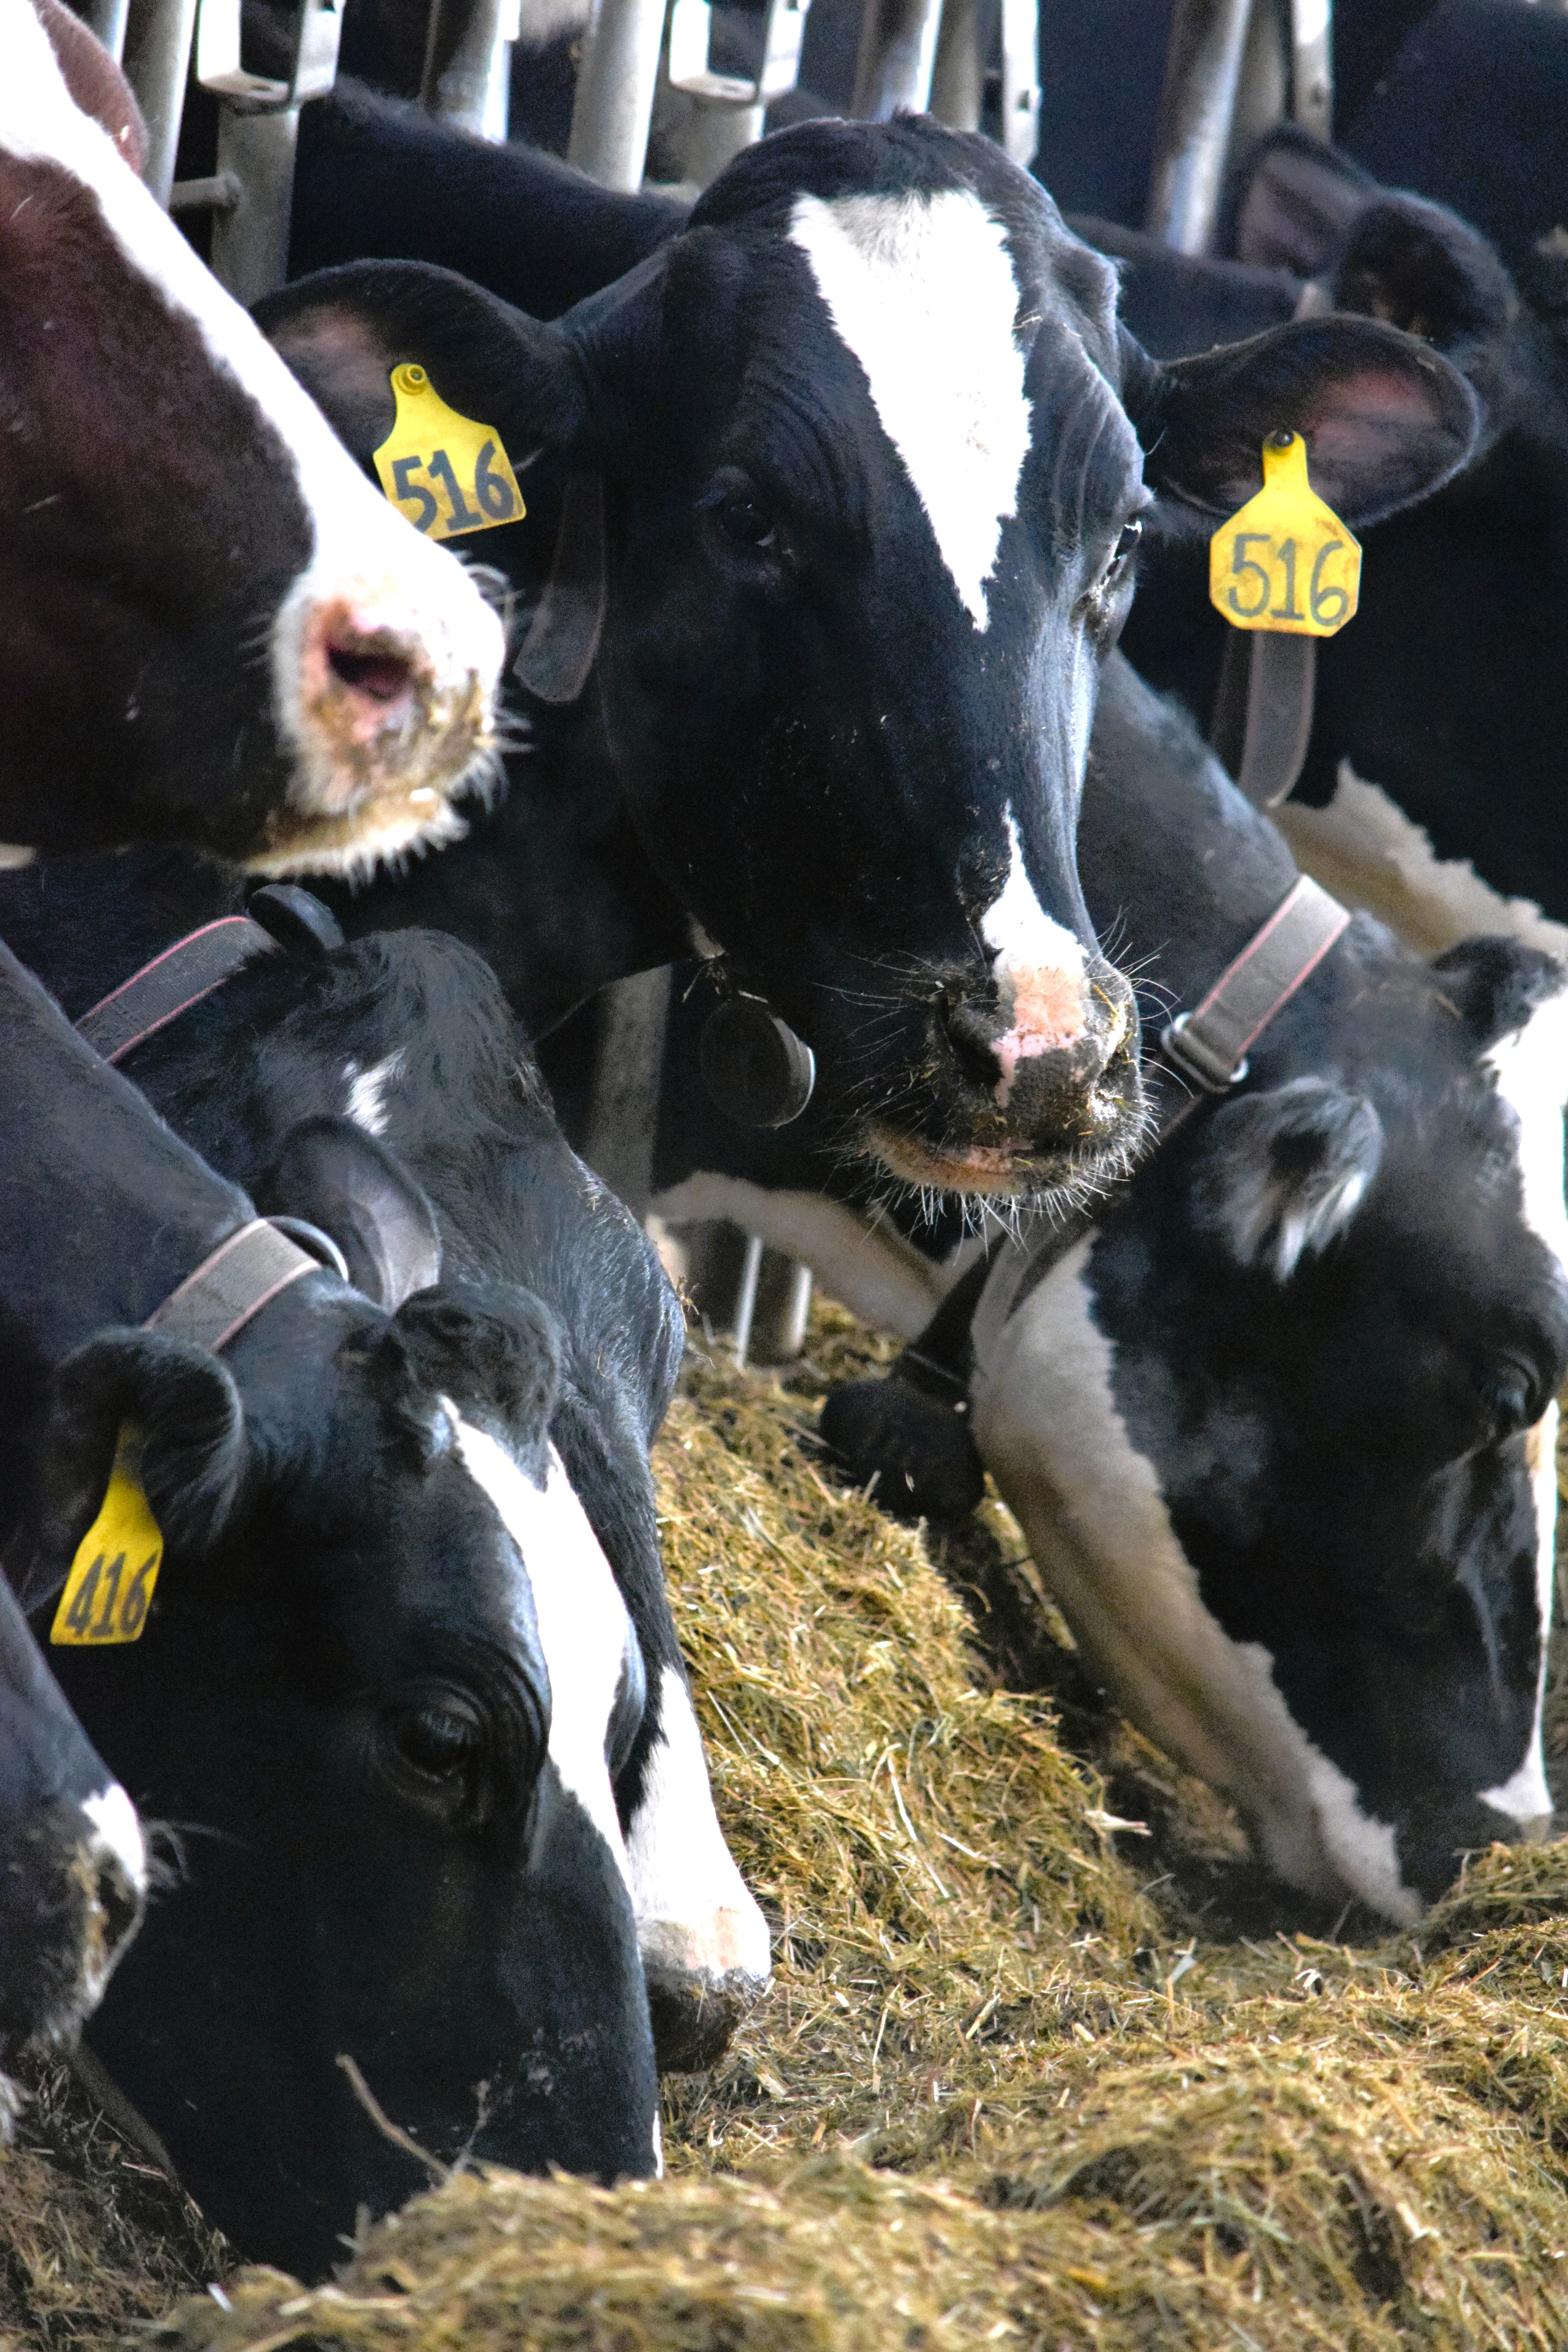 Report: July milk price hurt, insight on past trends